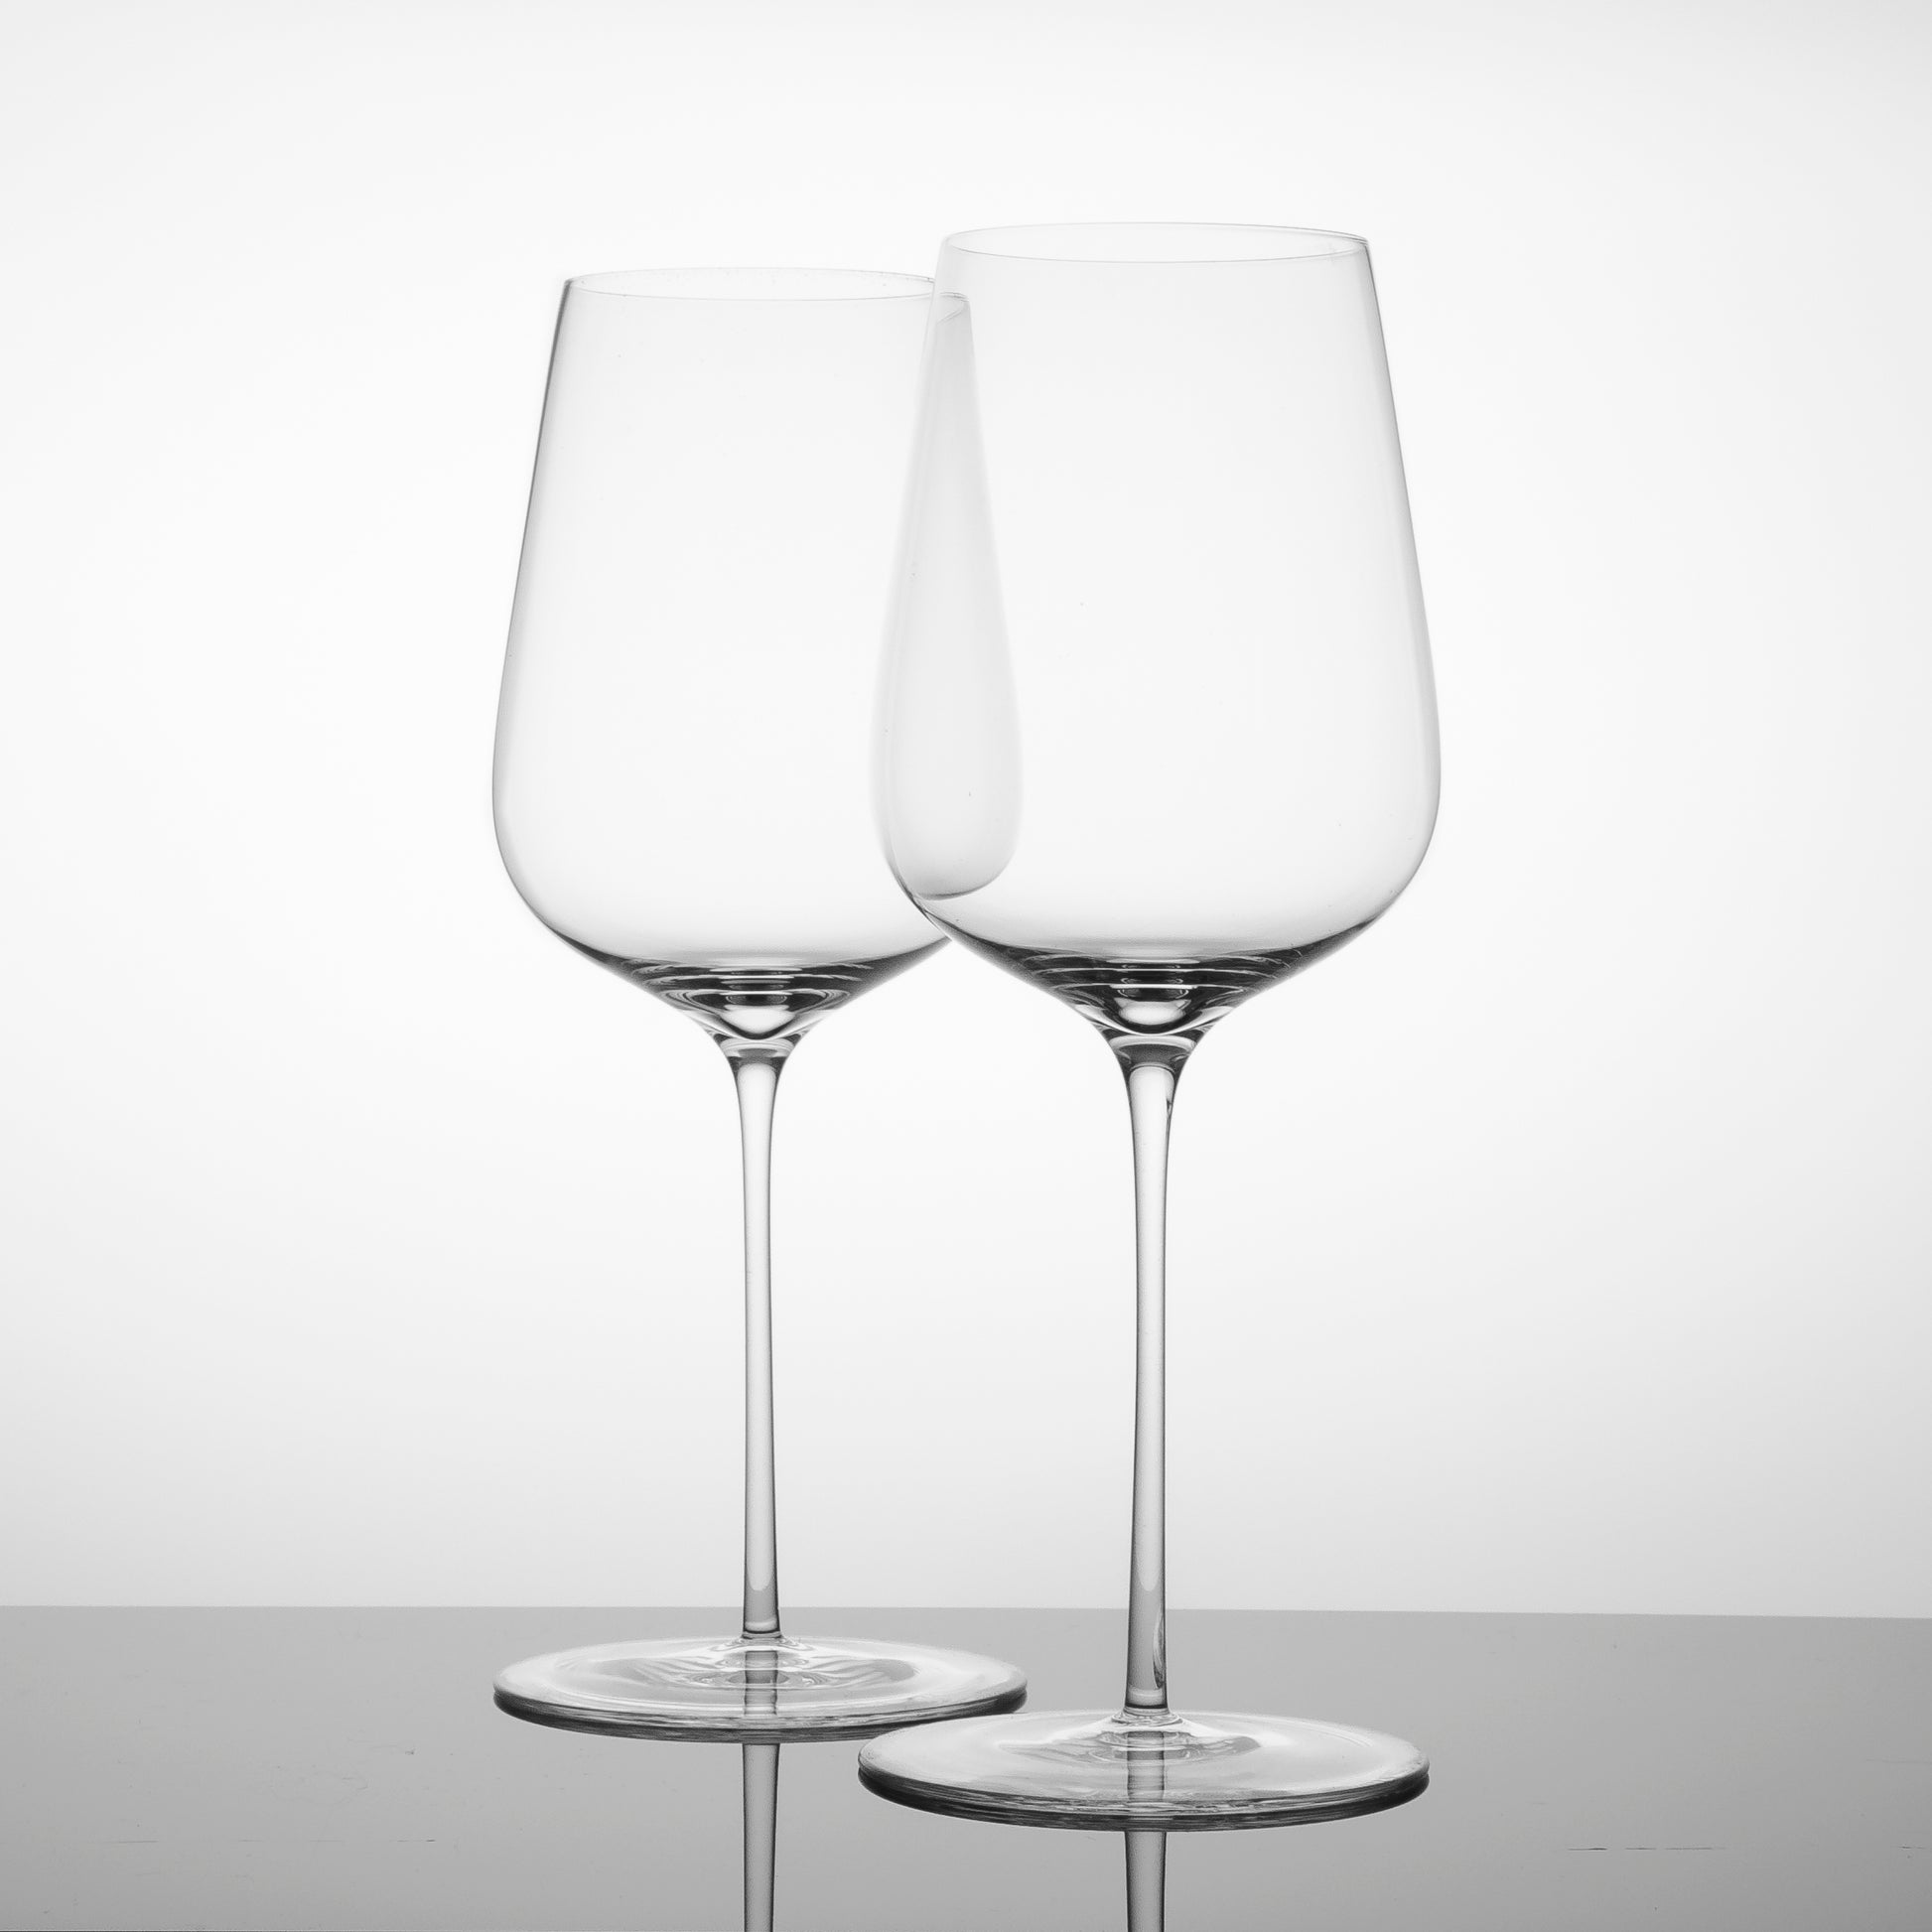  Zalto Denk'Art Universal Hand-Blown Crystal Wine